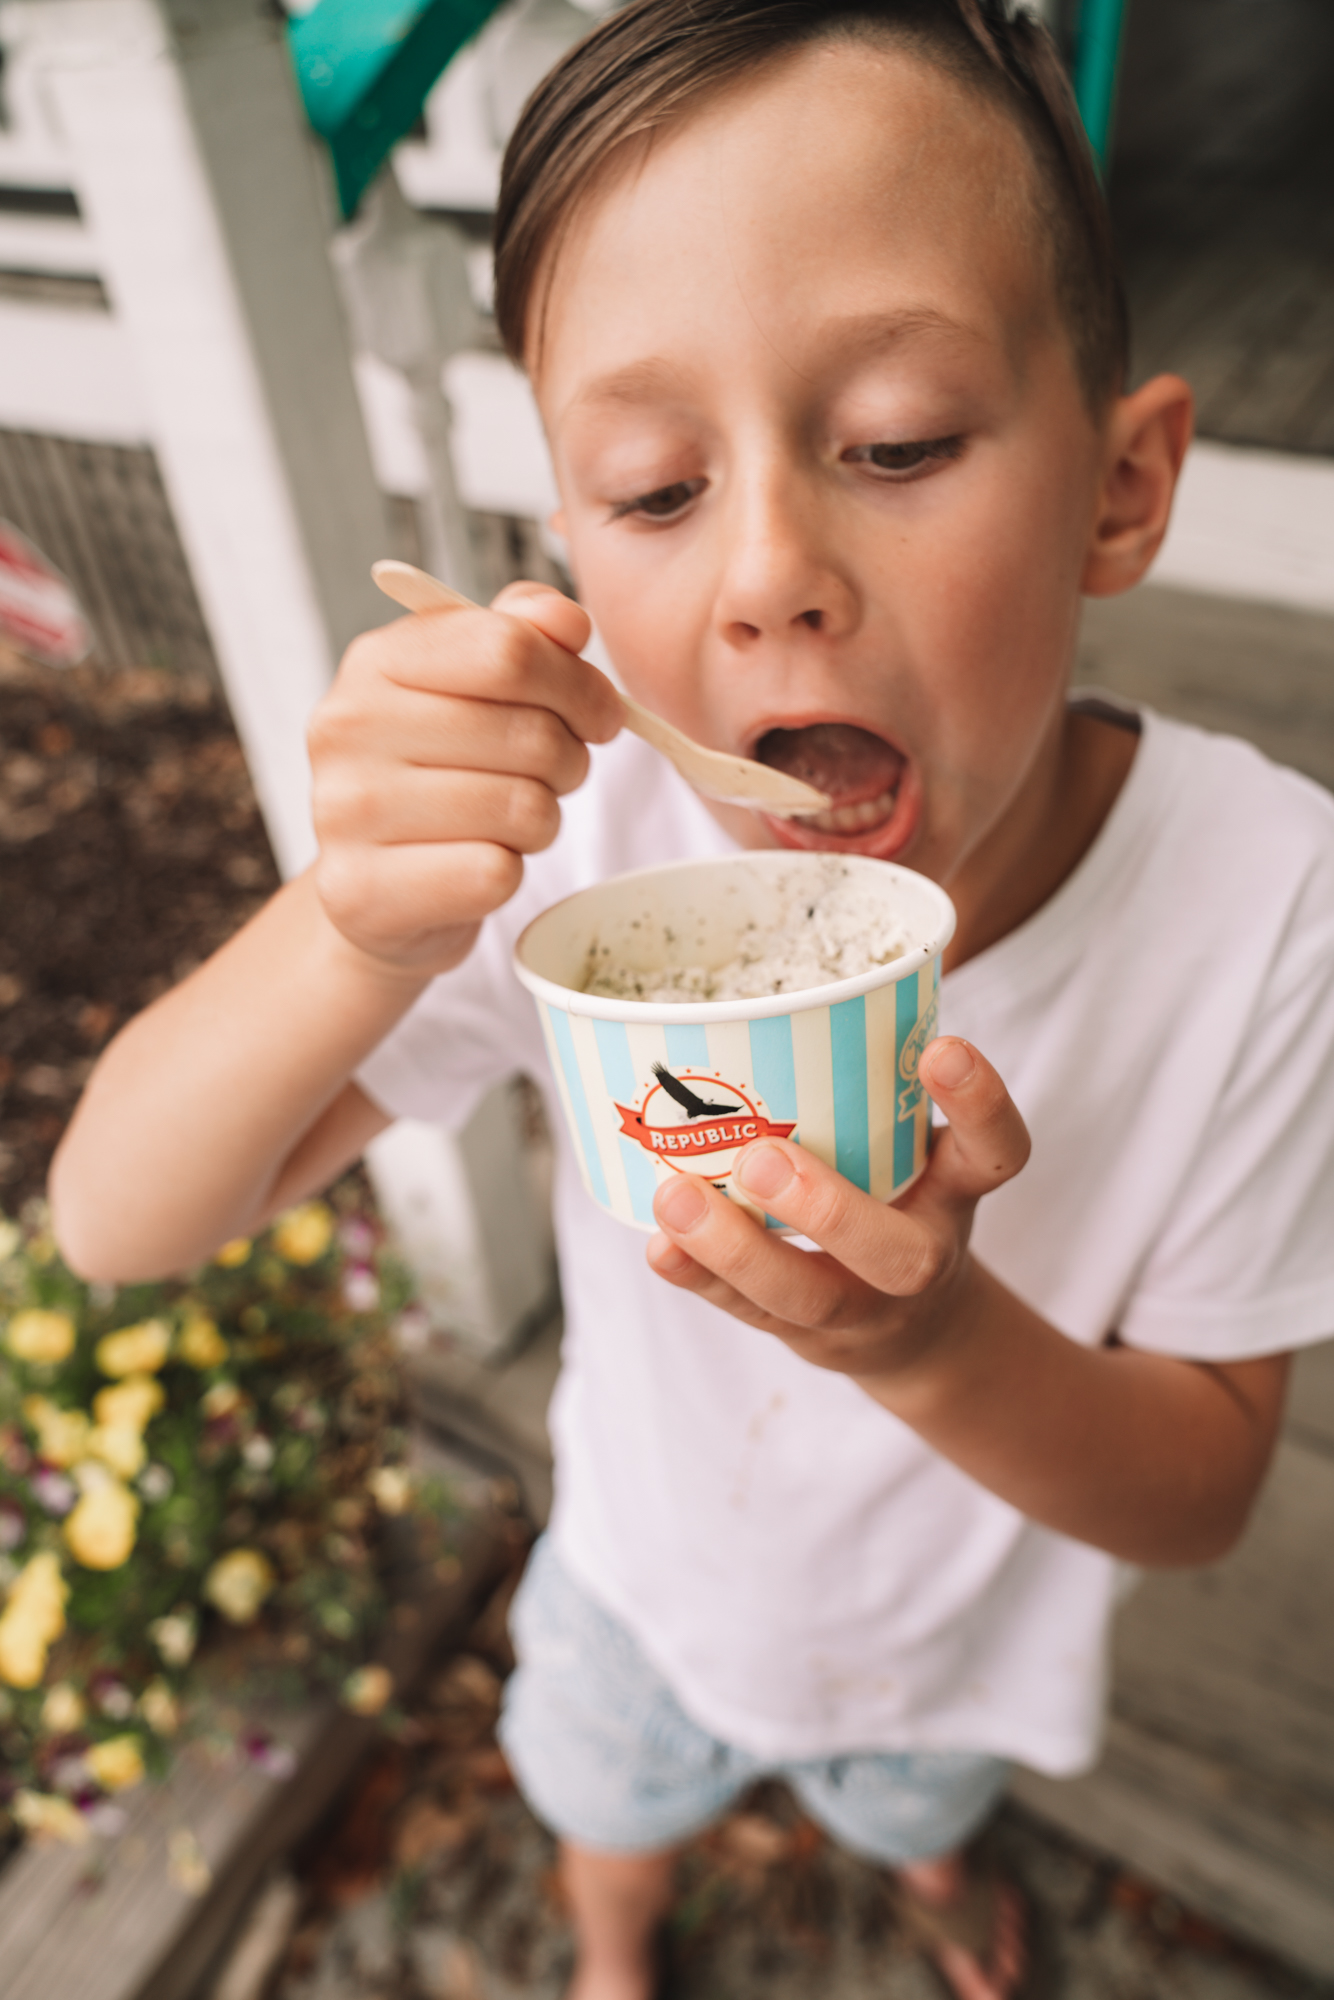 charleston sc visitors guide - a little boy devours his ice cream